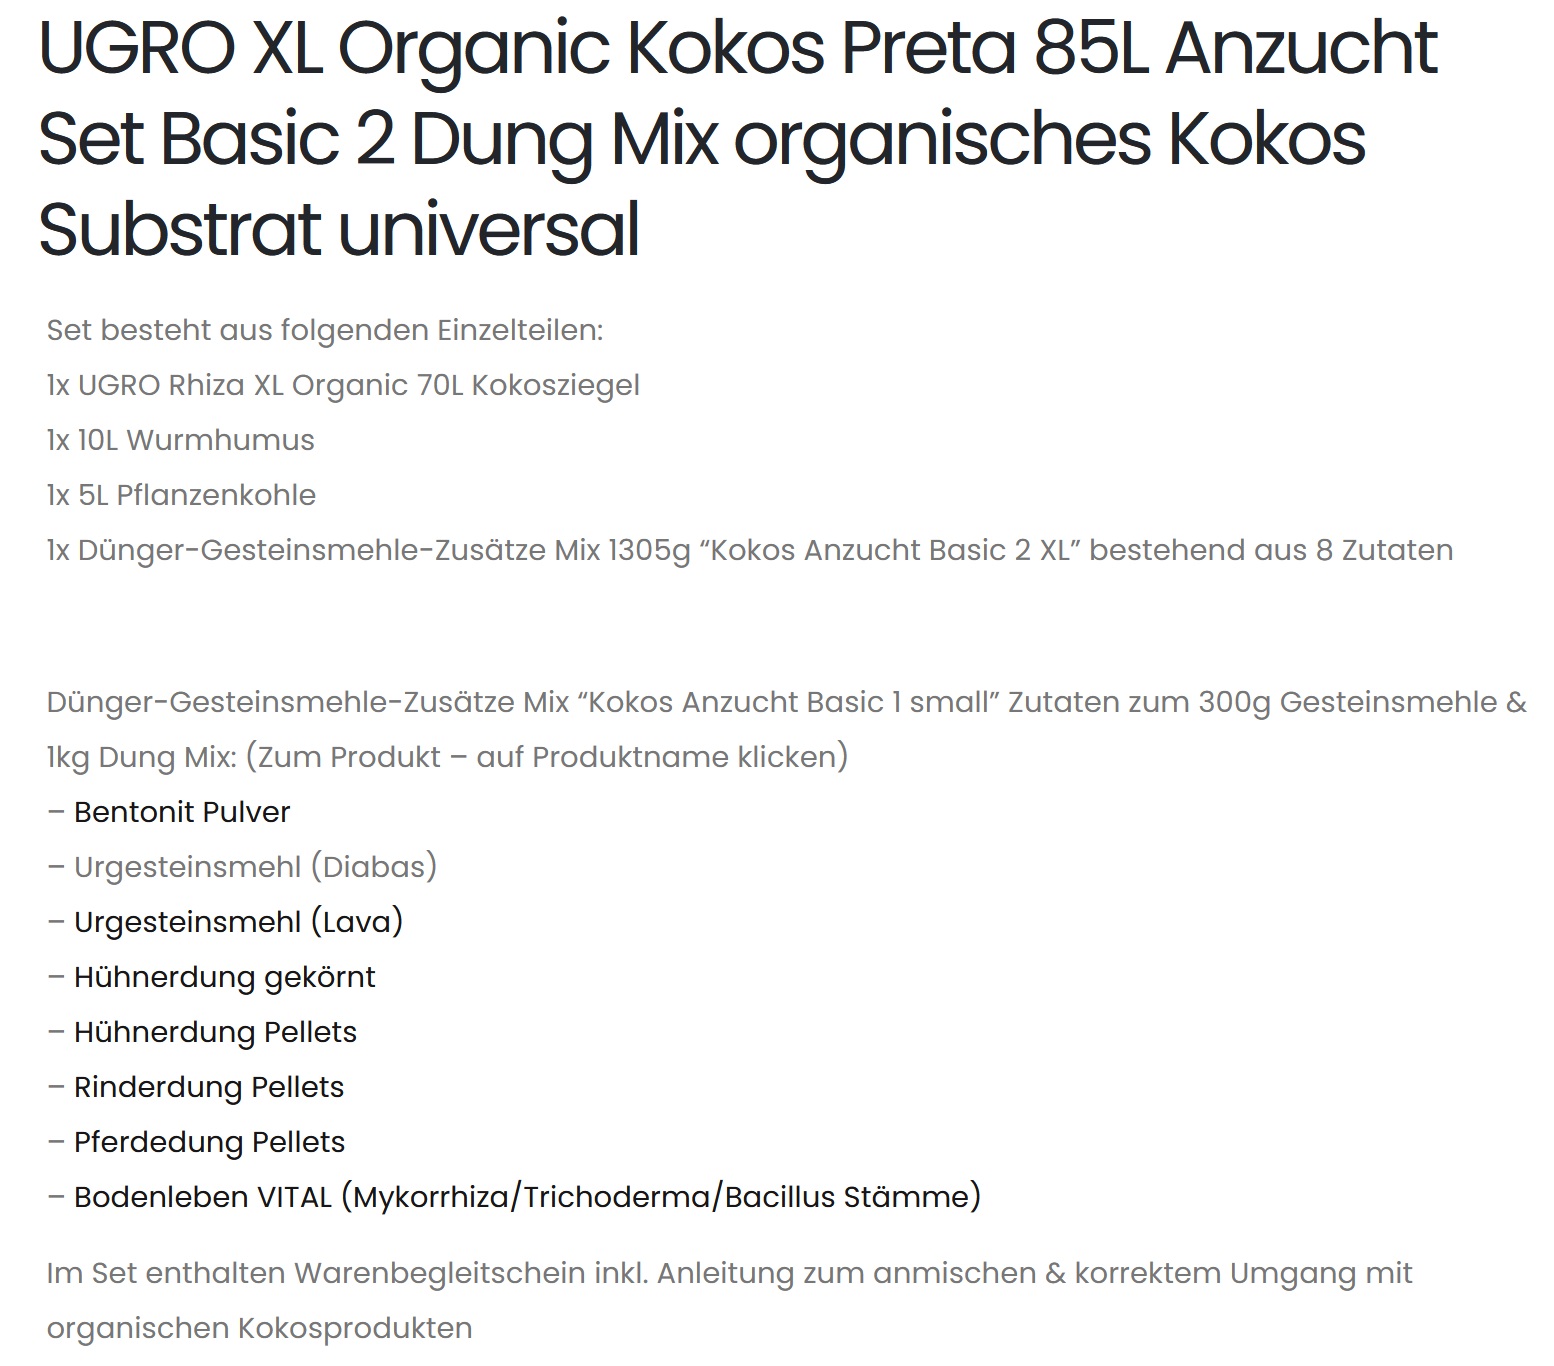 UGRO XL Organic Kokos Preta 85L Anzucht Set Basic 2 Dung Mix organisches Kokos Substrat universal